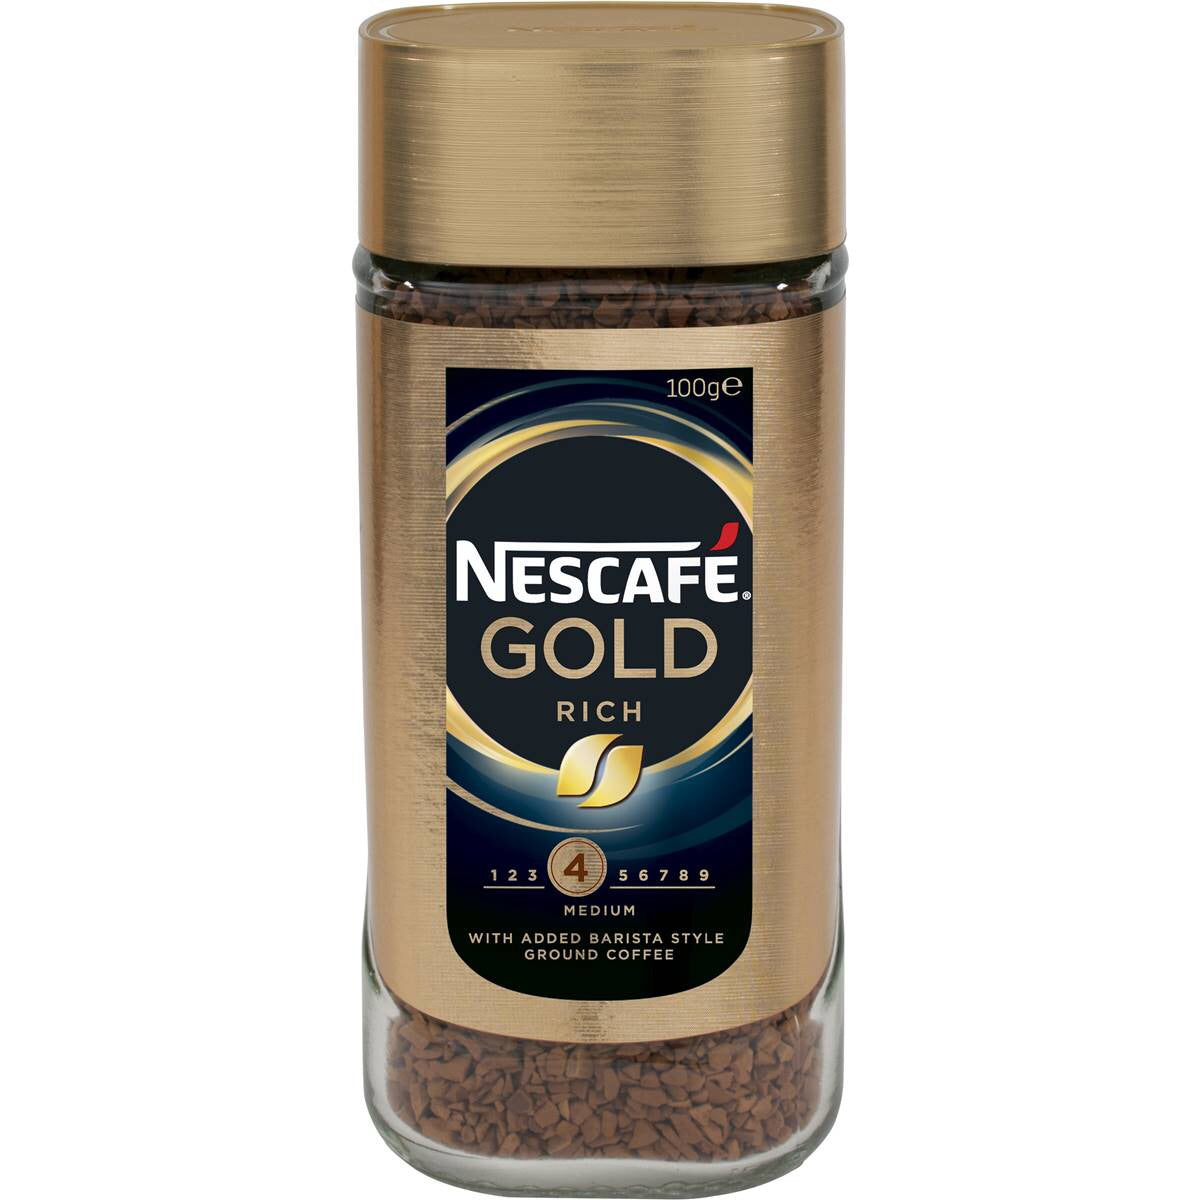 Nescafe Coffee GOLD